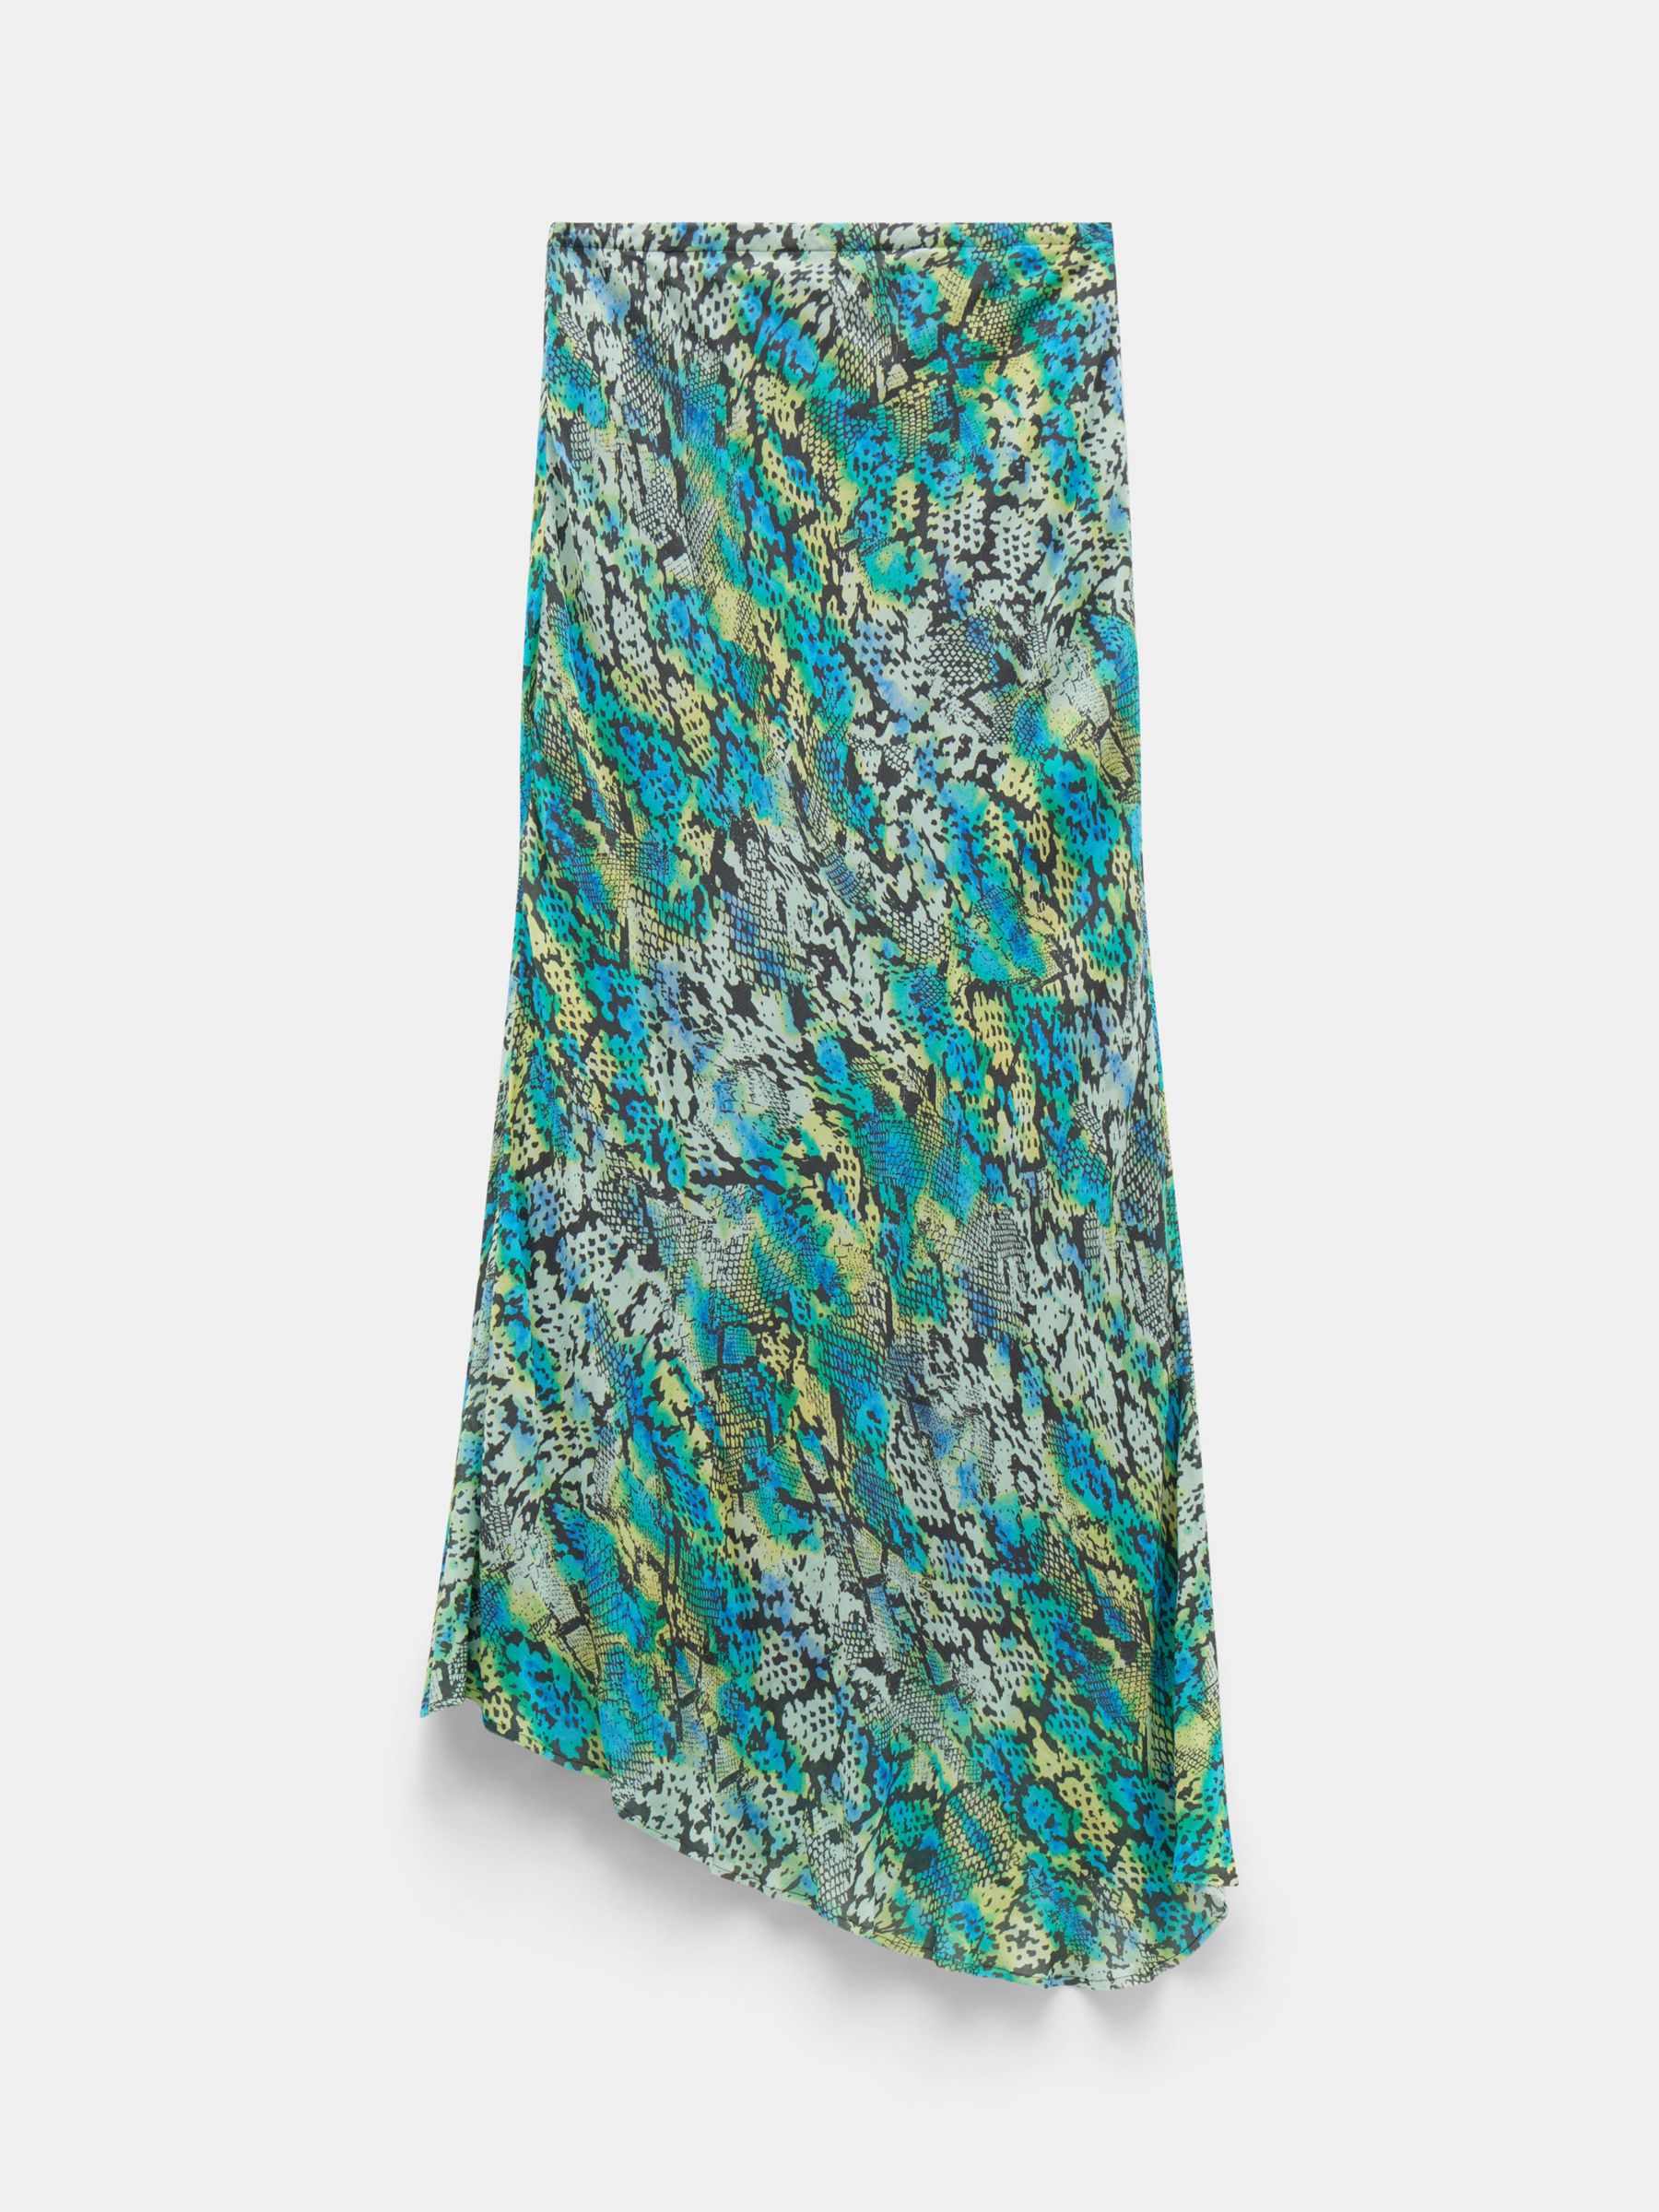 HUSH Hallie Tie Dye Snake Print Midi Skirt, Multi at John Lewis & Partners